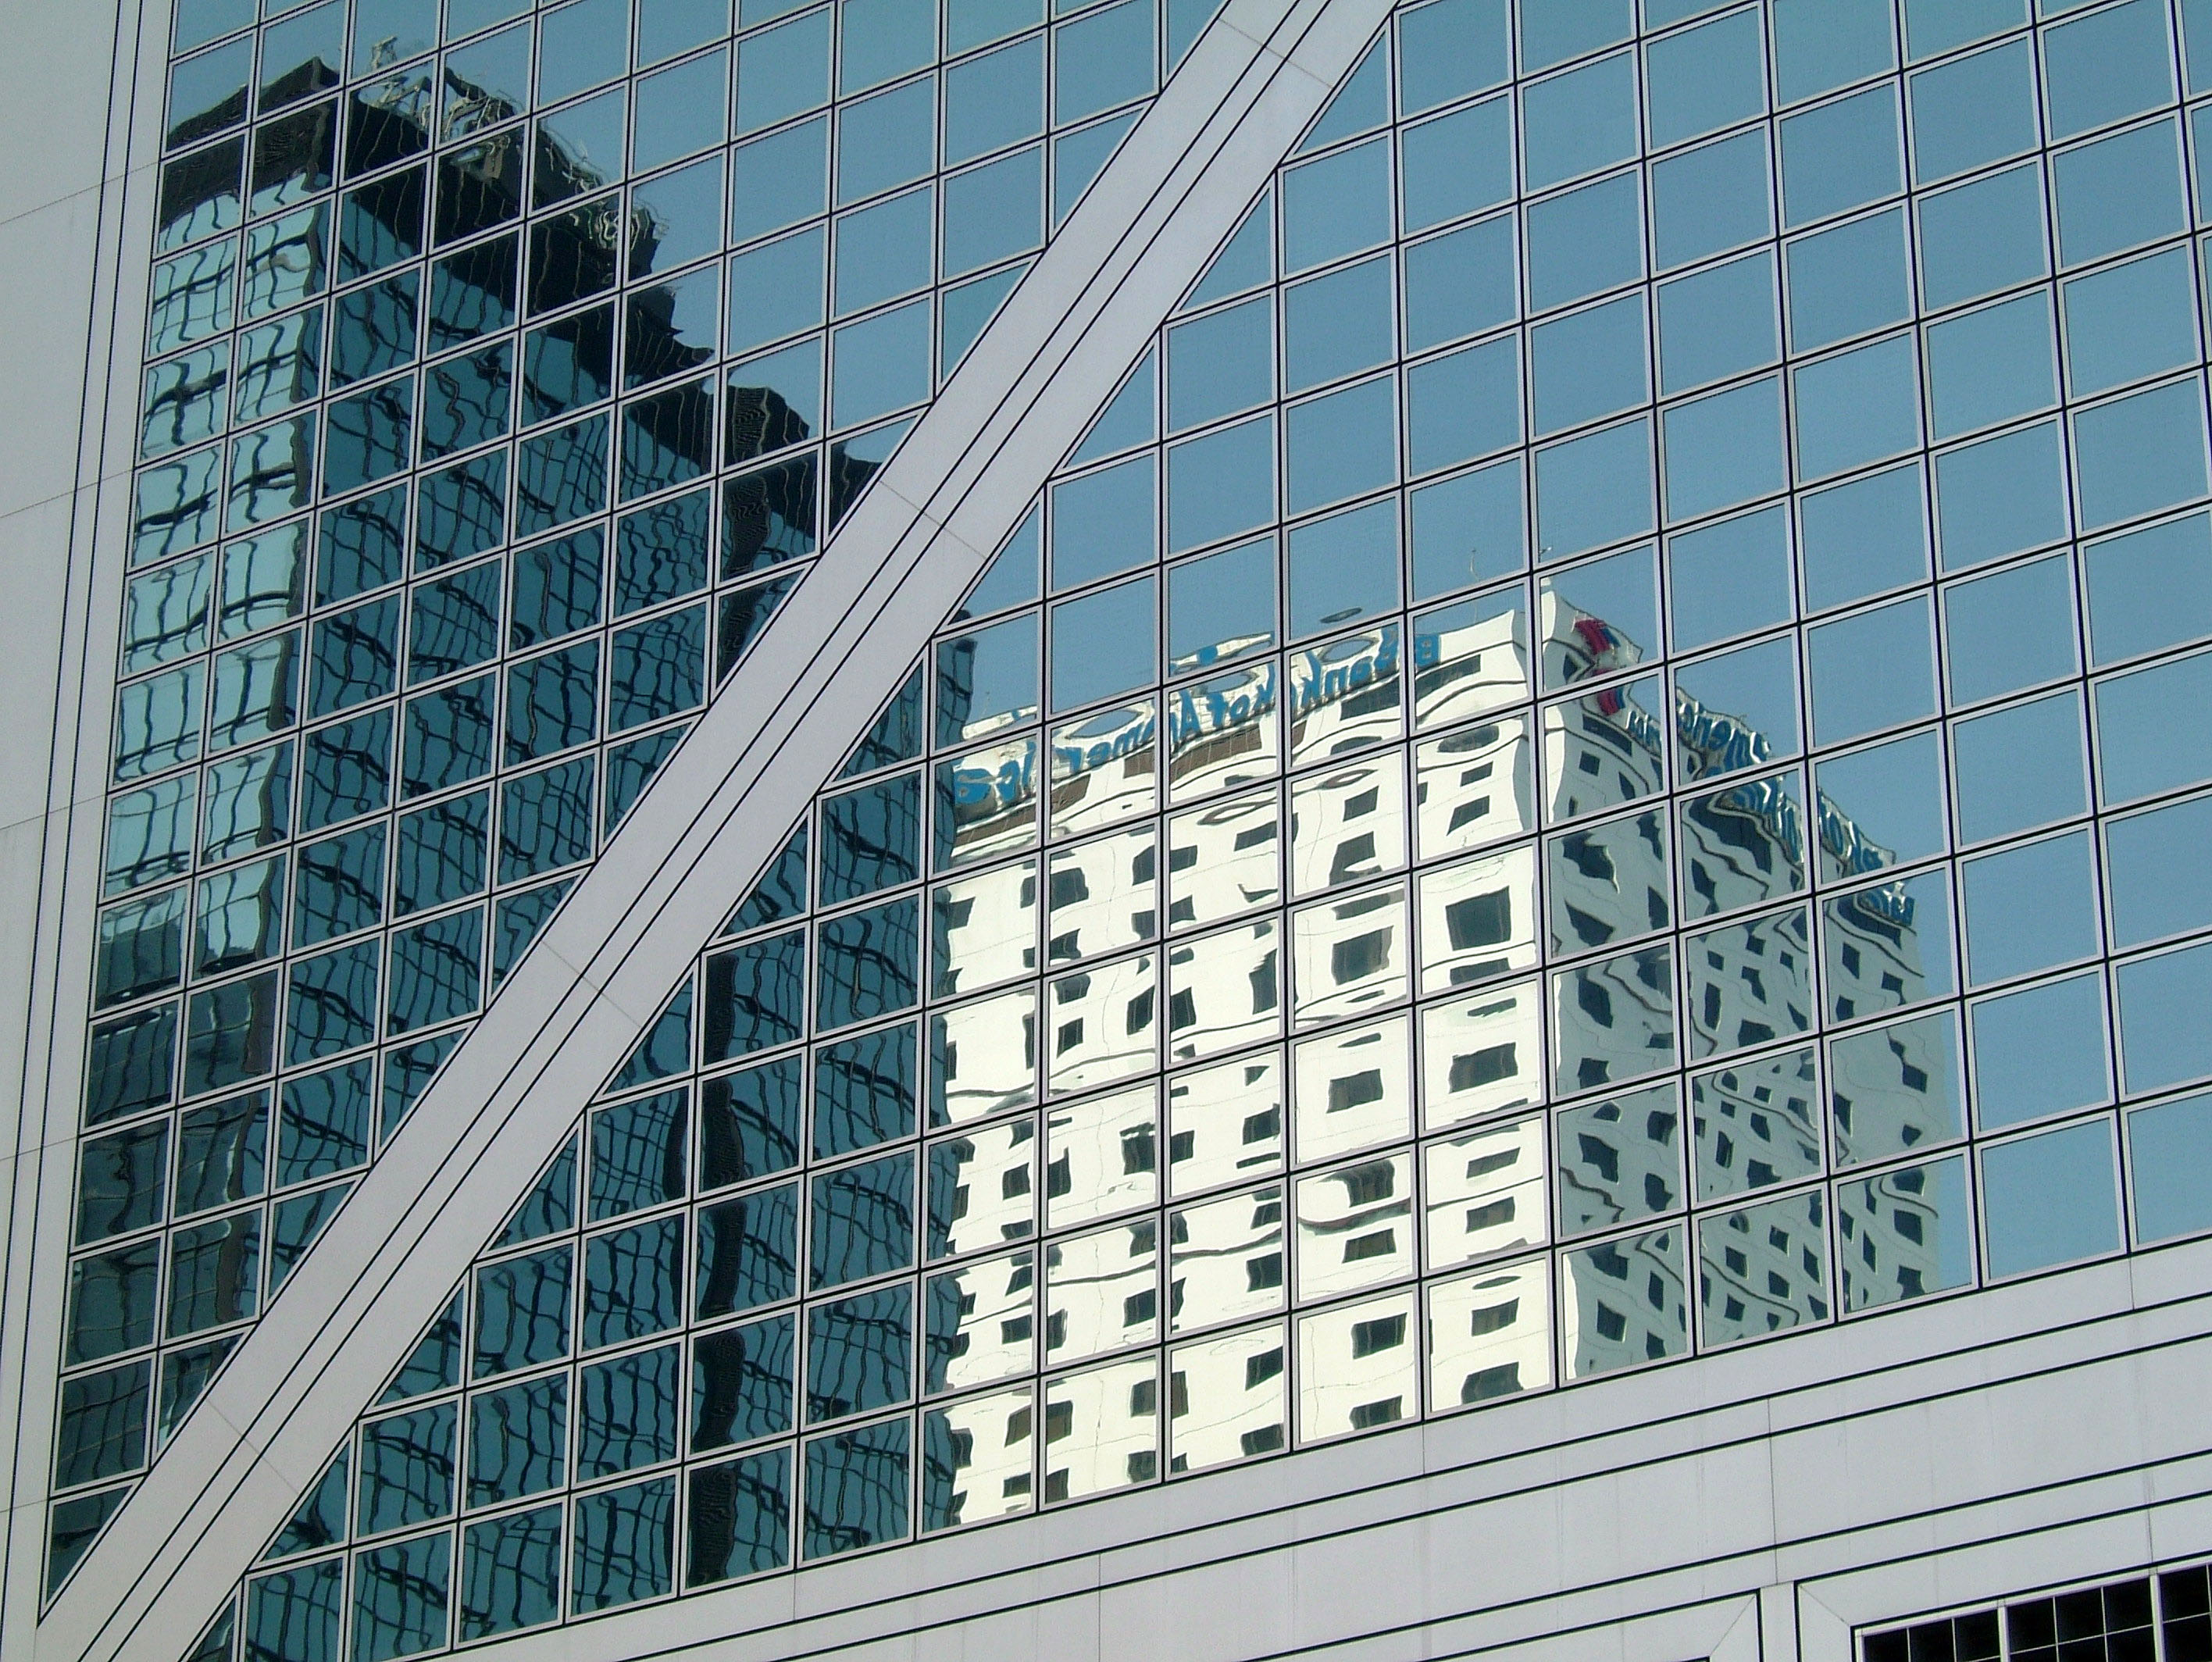 Textures Building window reflections Hong Kong 02